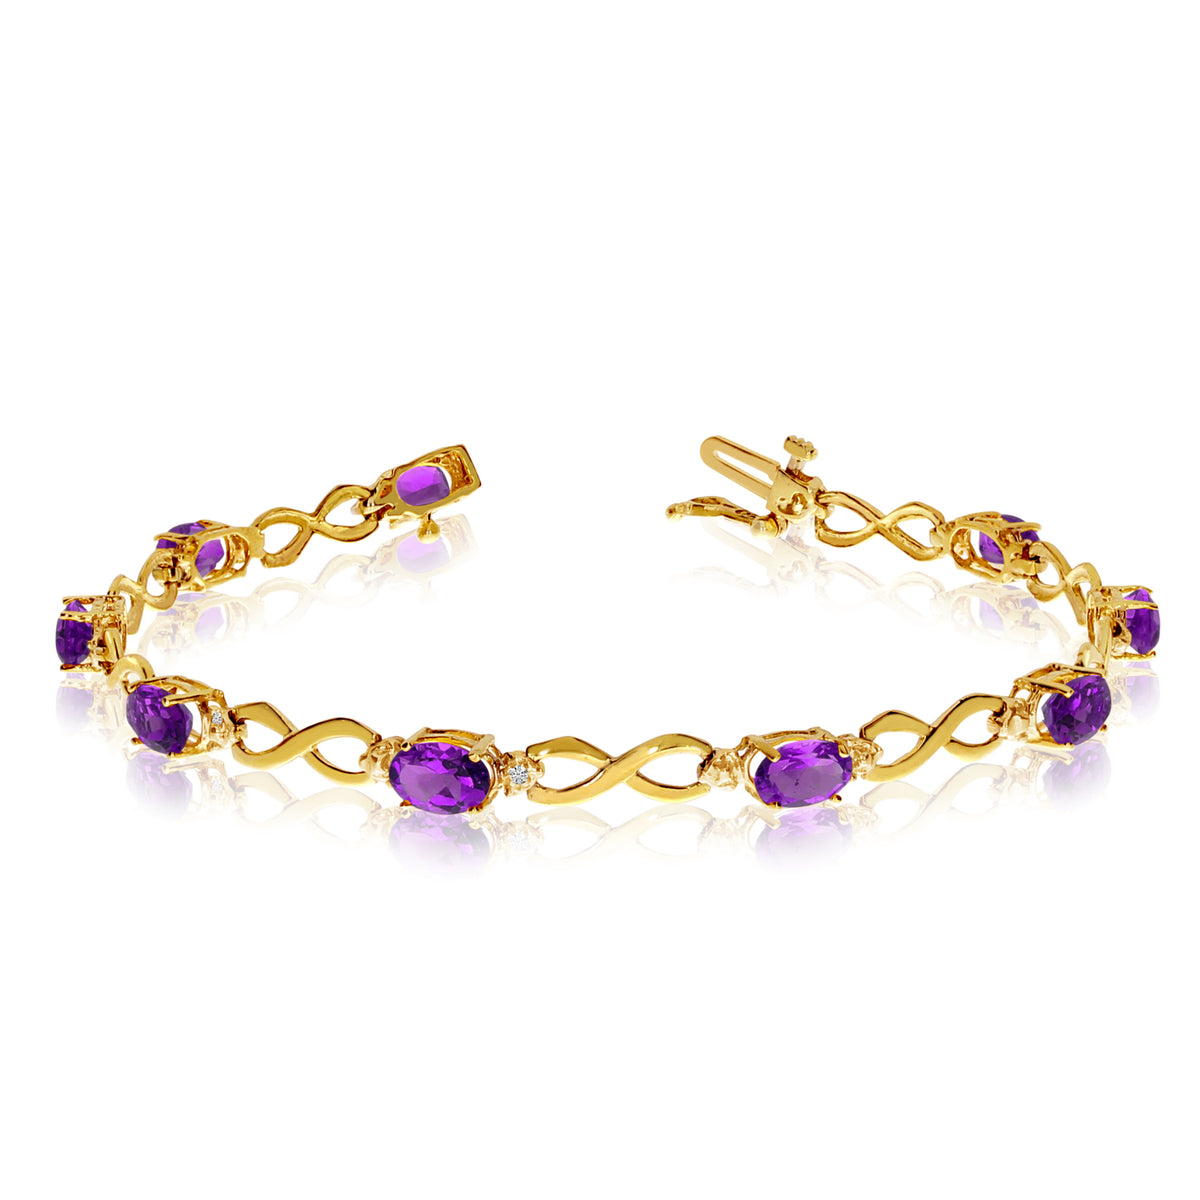 10K Yellow Gold Oval Amethyst Stones And Diamonds Infinity Tennis Bracelet, 7" fine designer jewelry for men and women